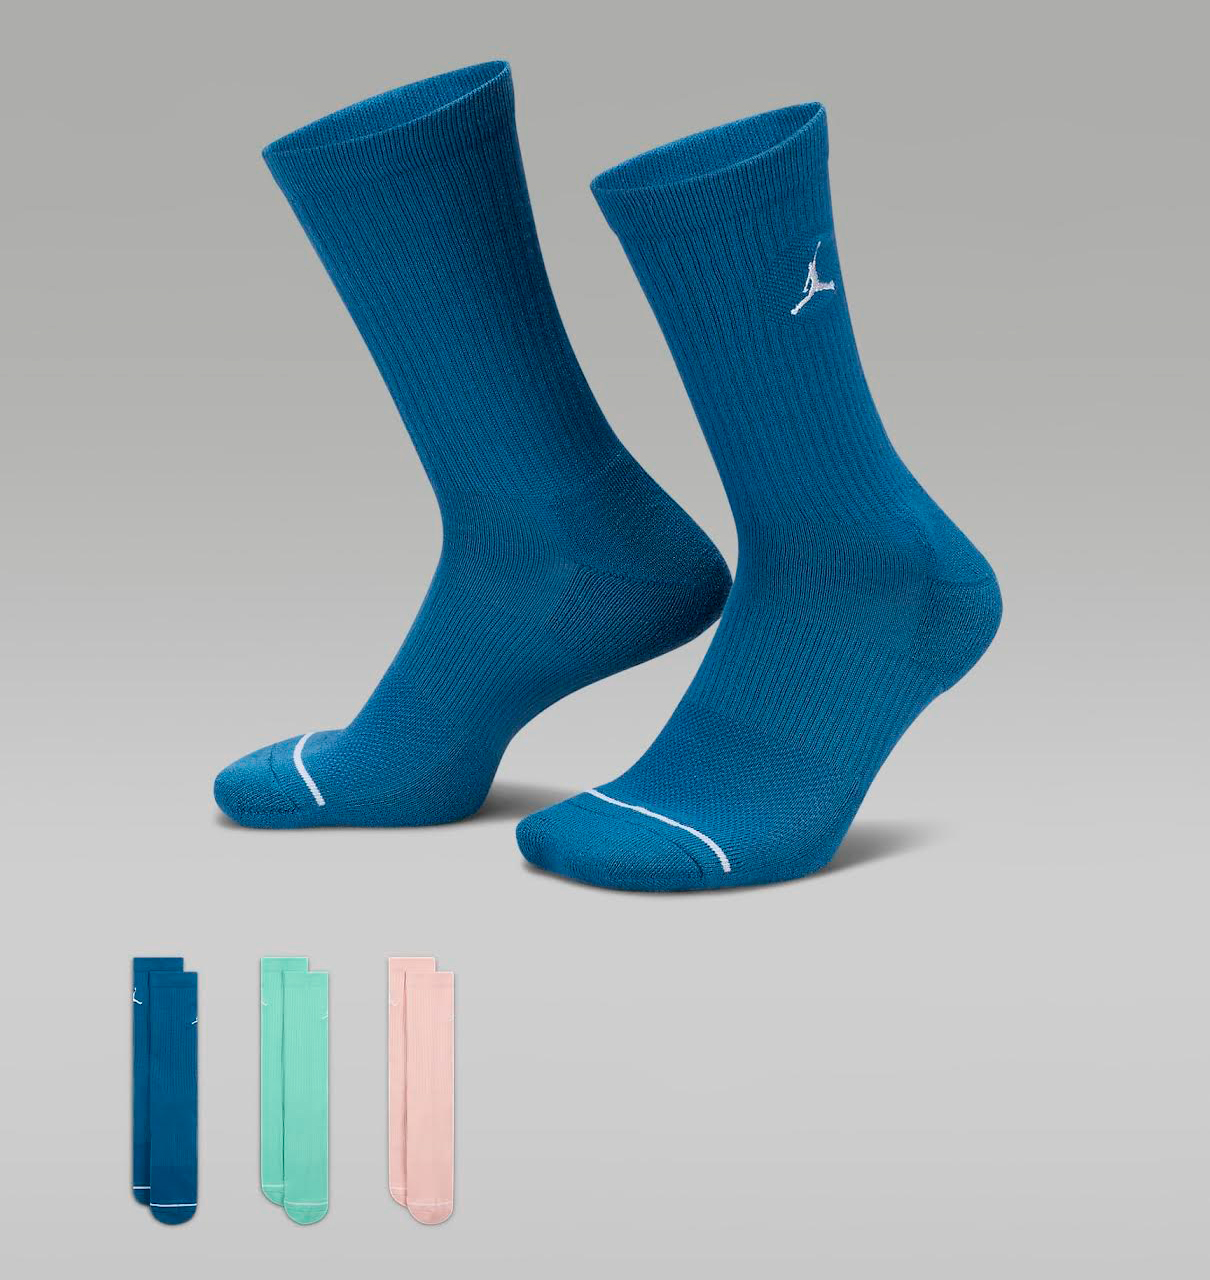 Jordan-Everyday-Crew-Socks-Industrial-Blue-Emerald-Mint-Pink